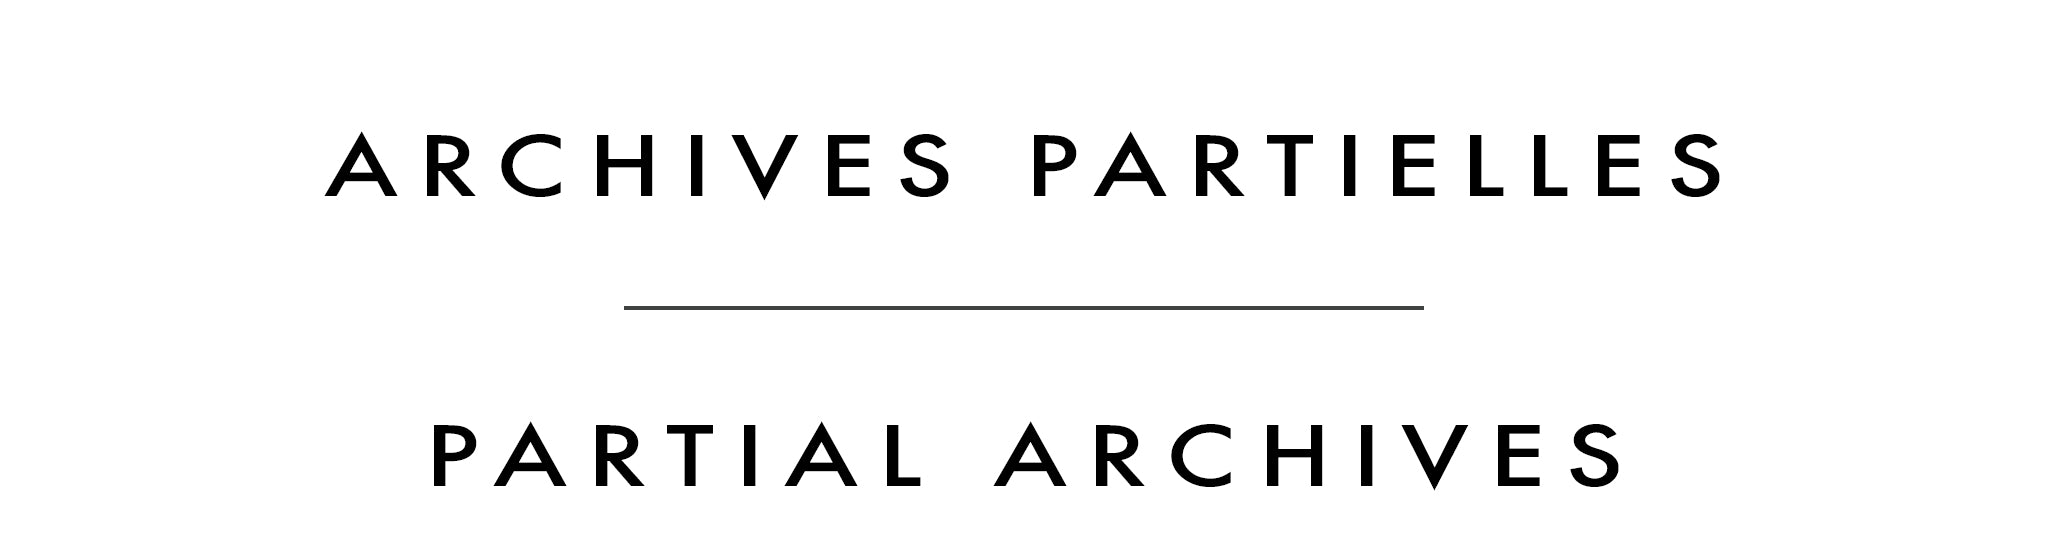 Archives partielles | Partial Archives | Maya Eventov